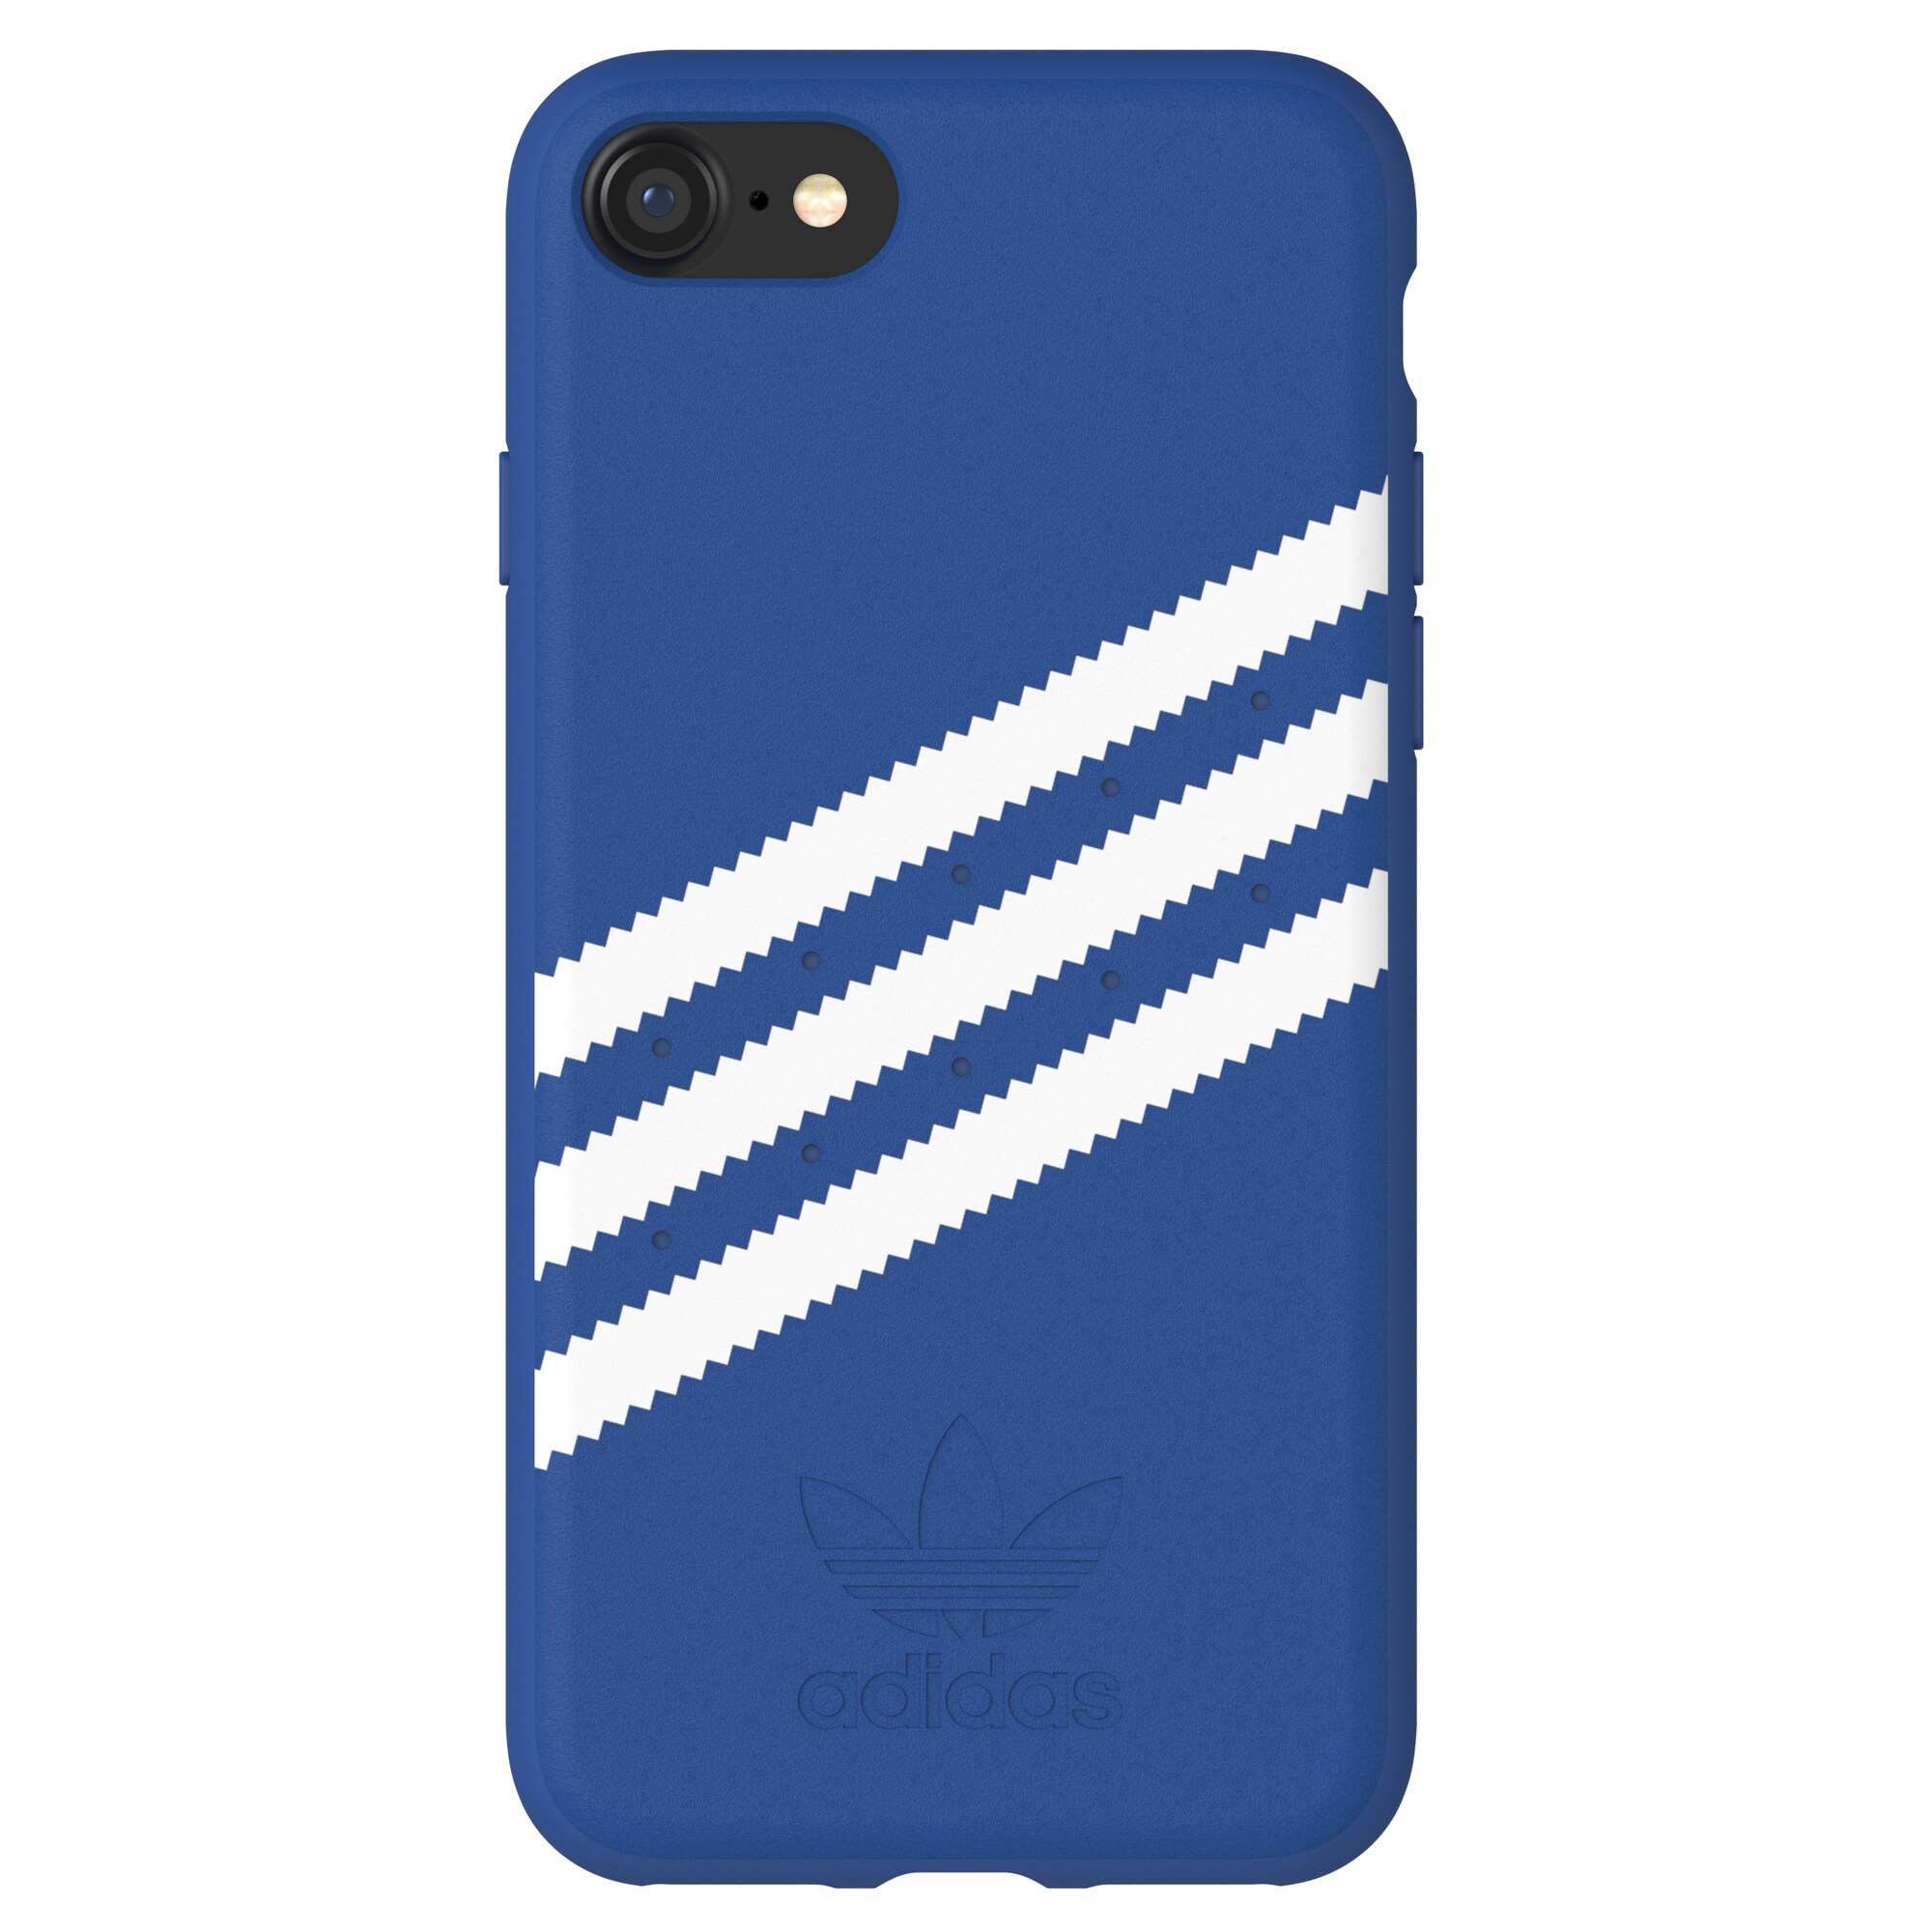 Adidas iPhone 6/6S/7/8 cover (blå/hvid) | Elgiganten